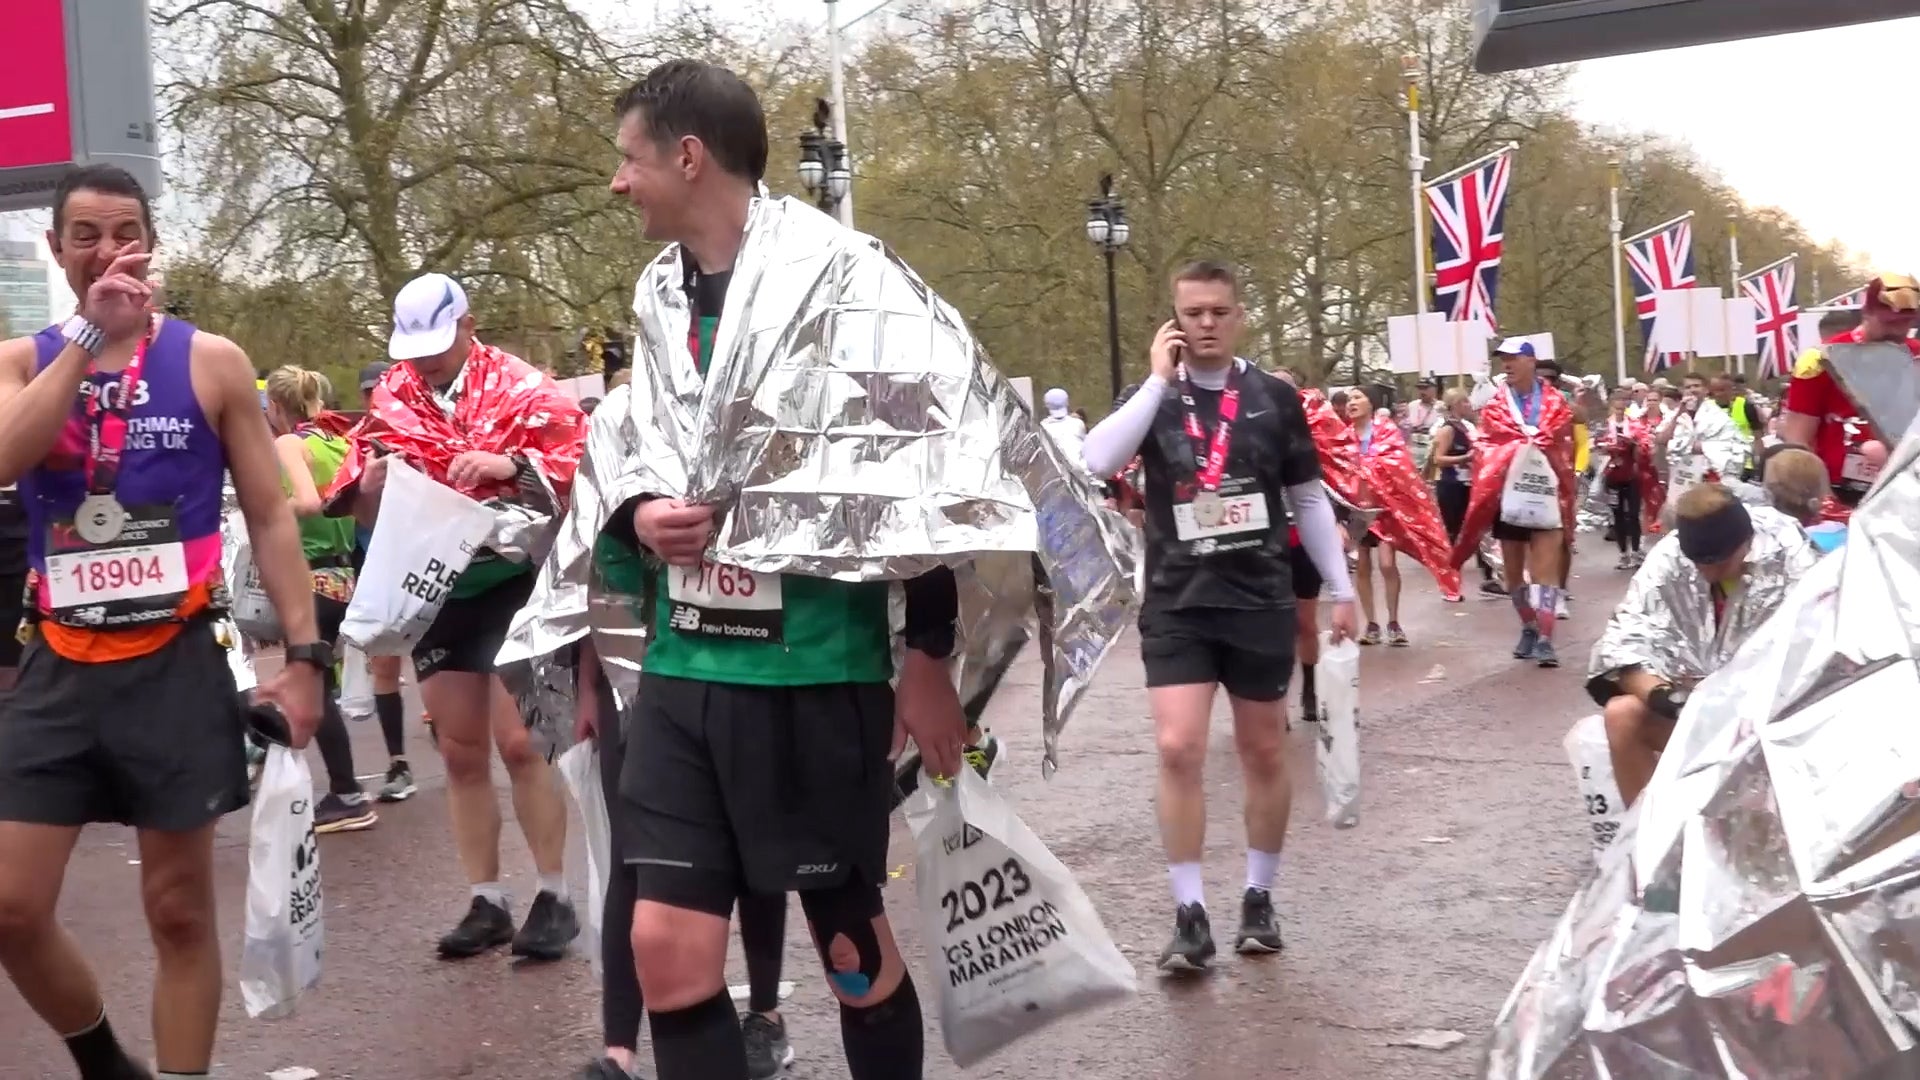 Moment emergency alert test goes off at London Marathon